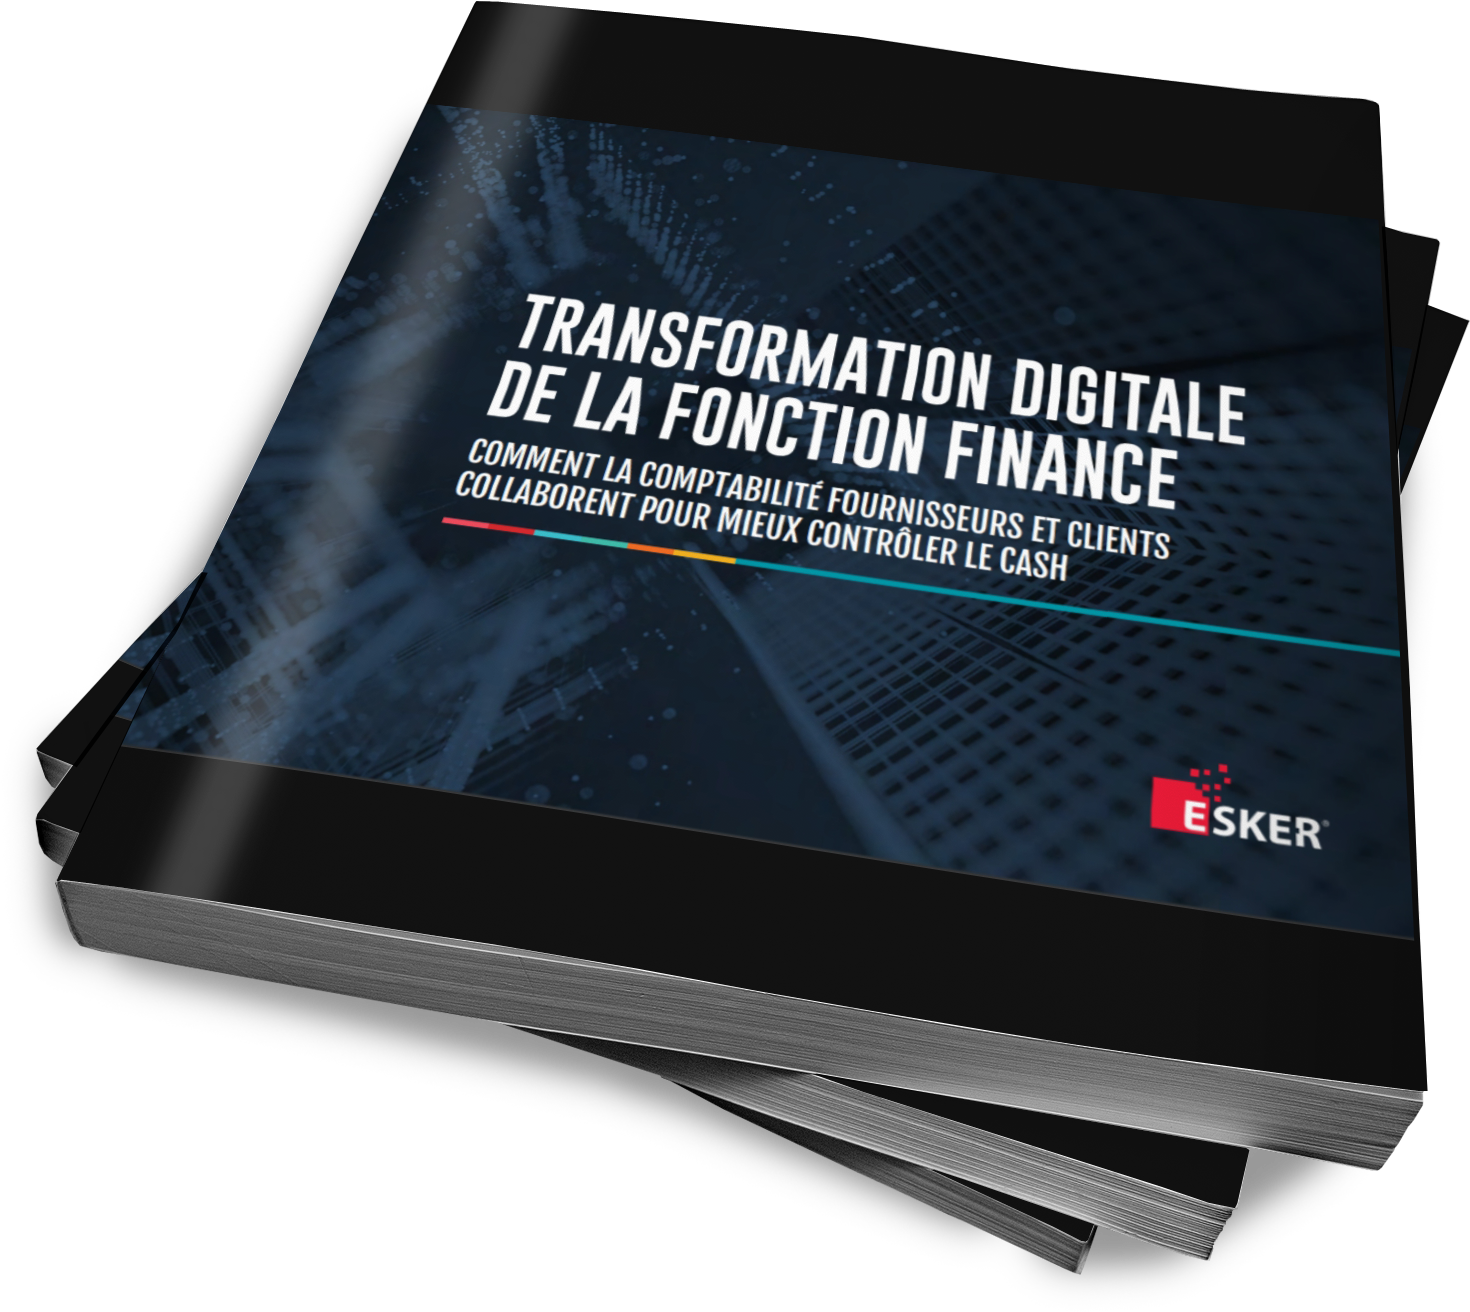 3D-APAR-Ebook-Transformation_Digitale_Fonction_Finance.png